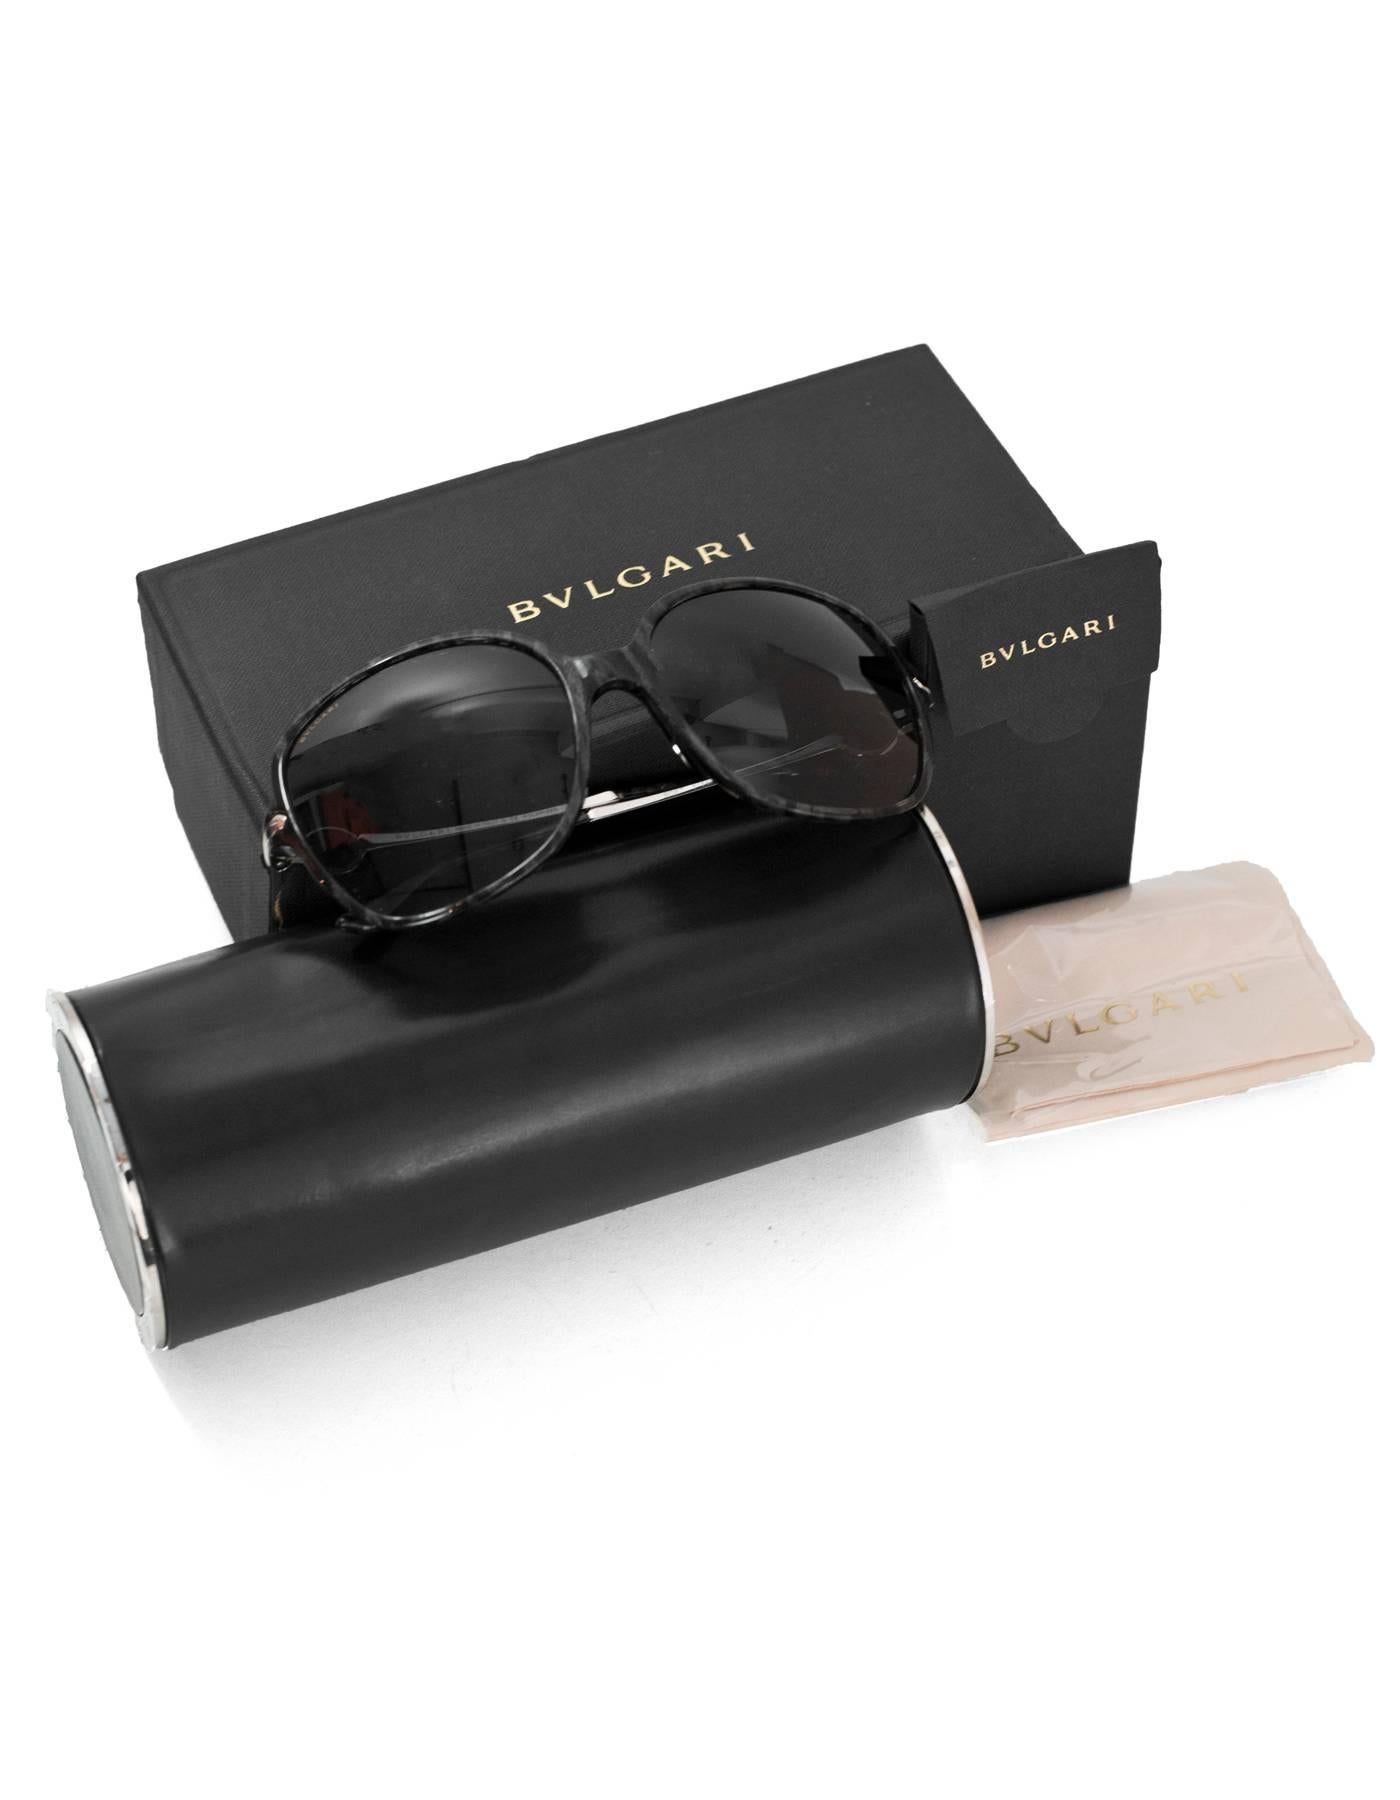 Bvlgari 8087 5155/T3 Black Tortoise Sunglasses with Box and Case 1